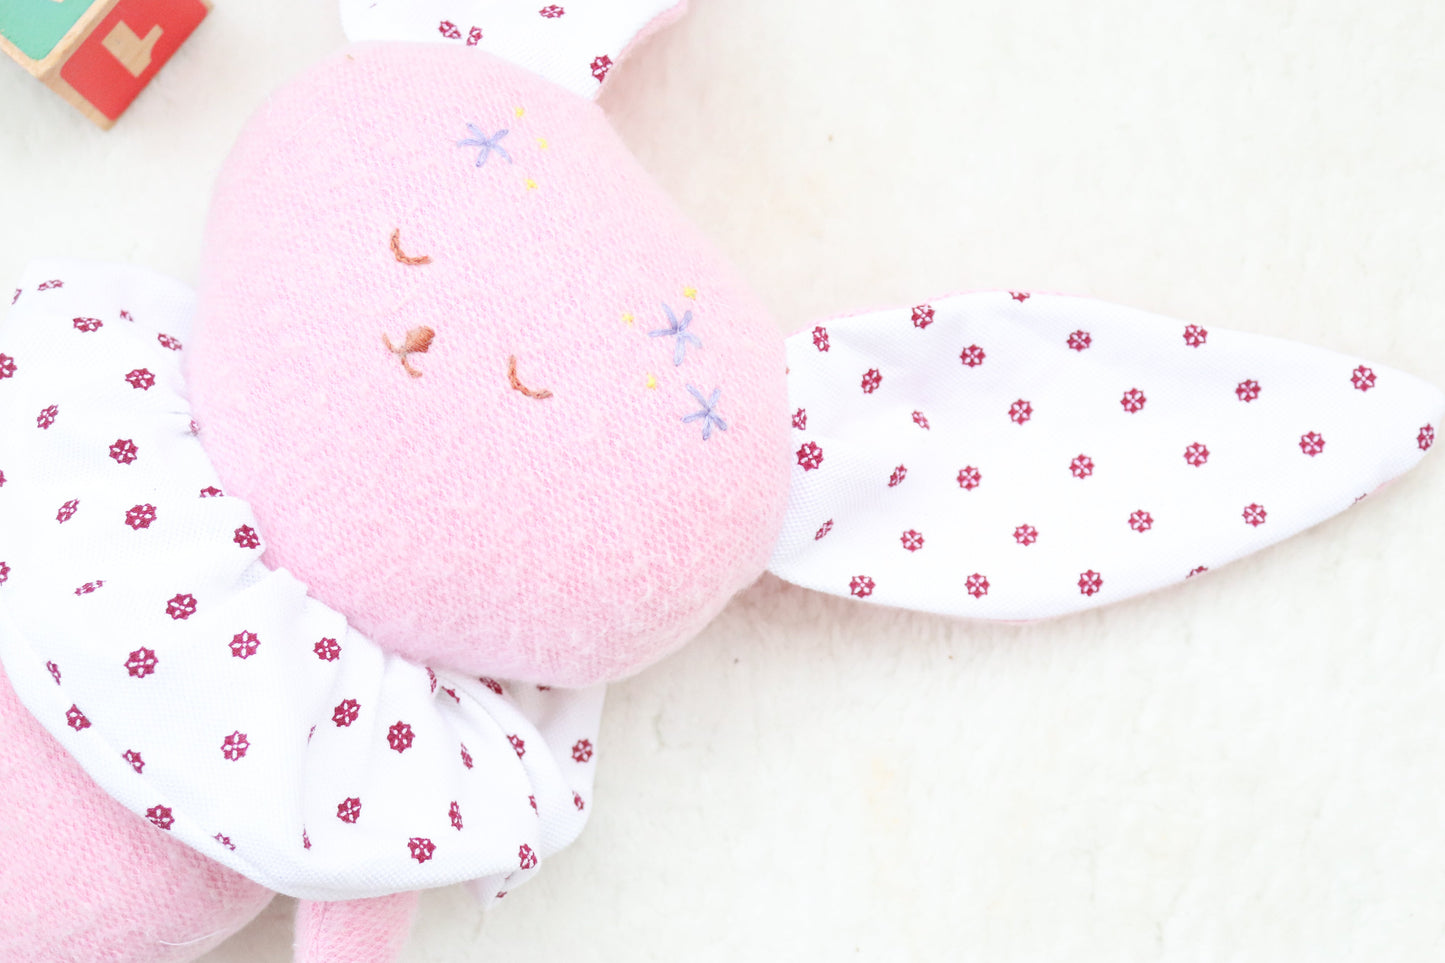 Handmade dolls - Handmade Pink Bunny - Fabric dolls for kids - Handmade stuffed toy